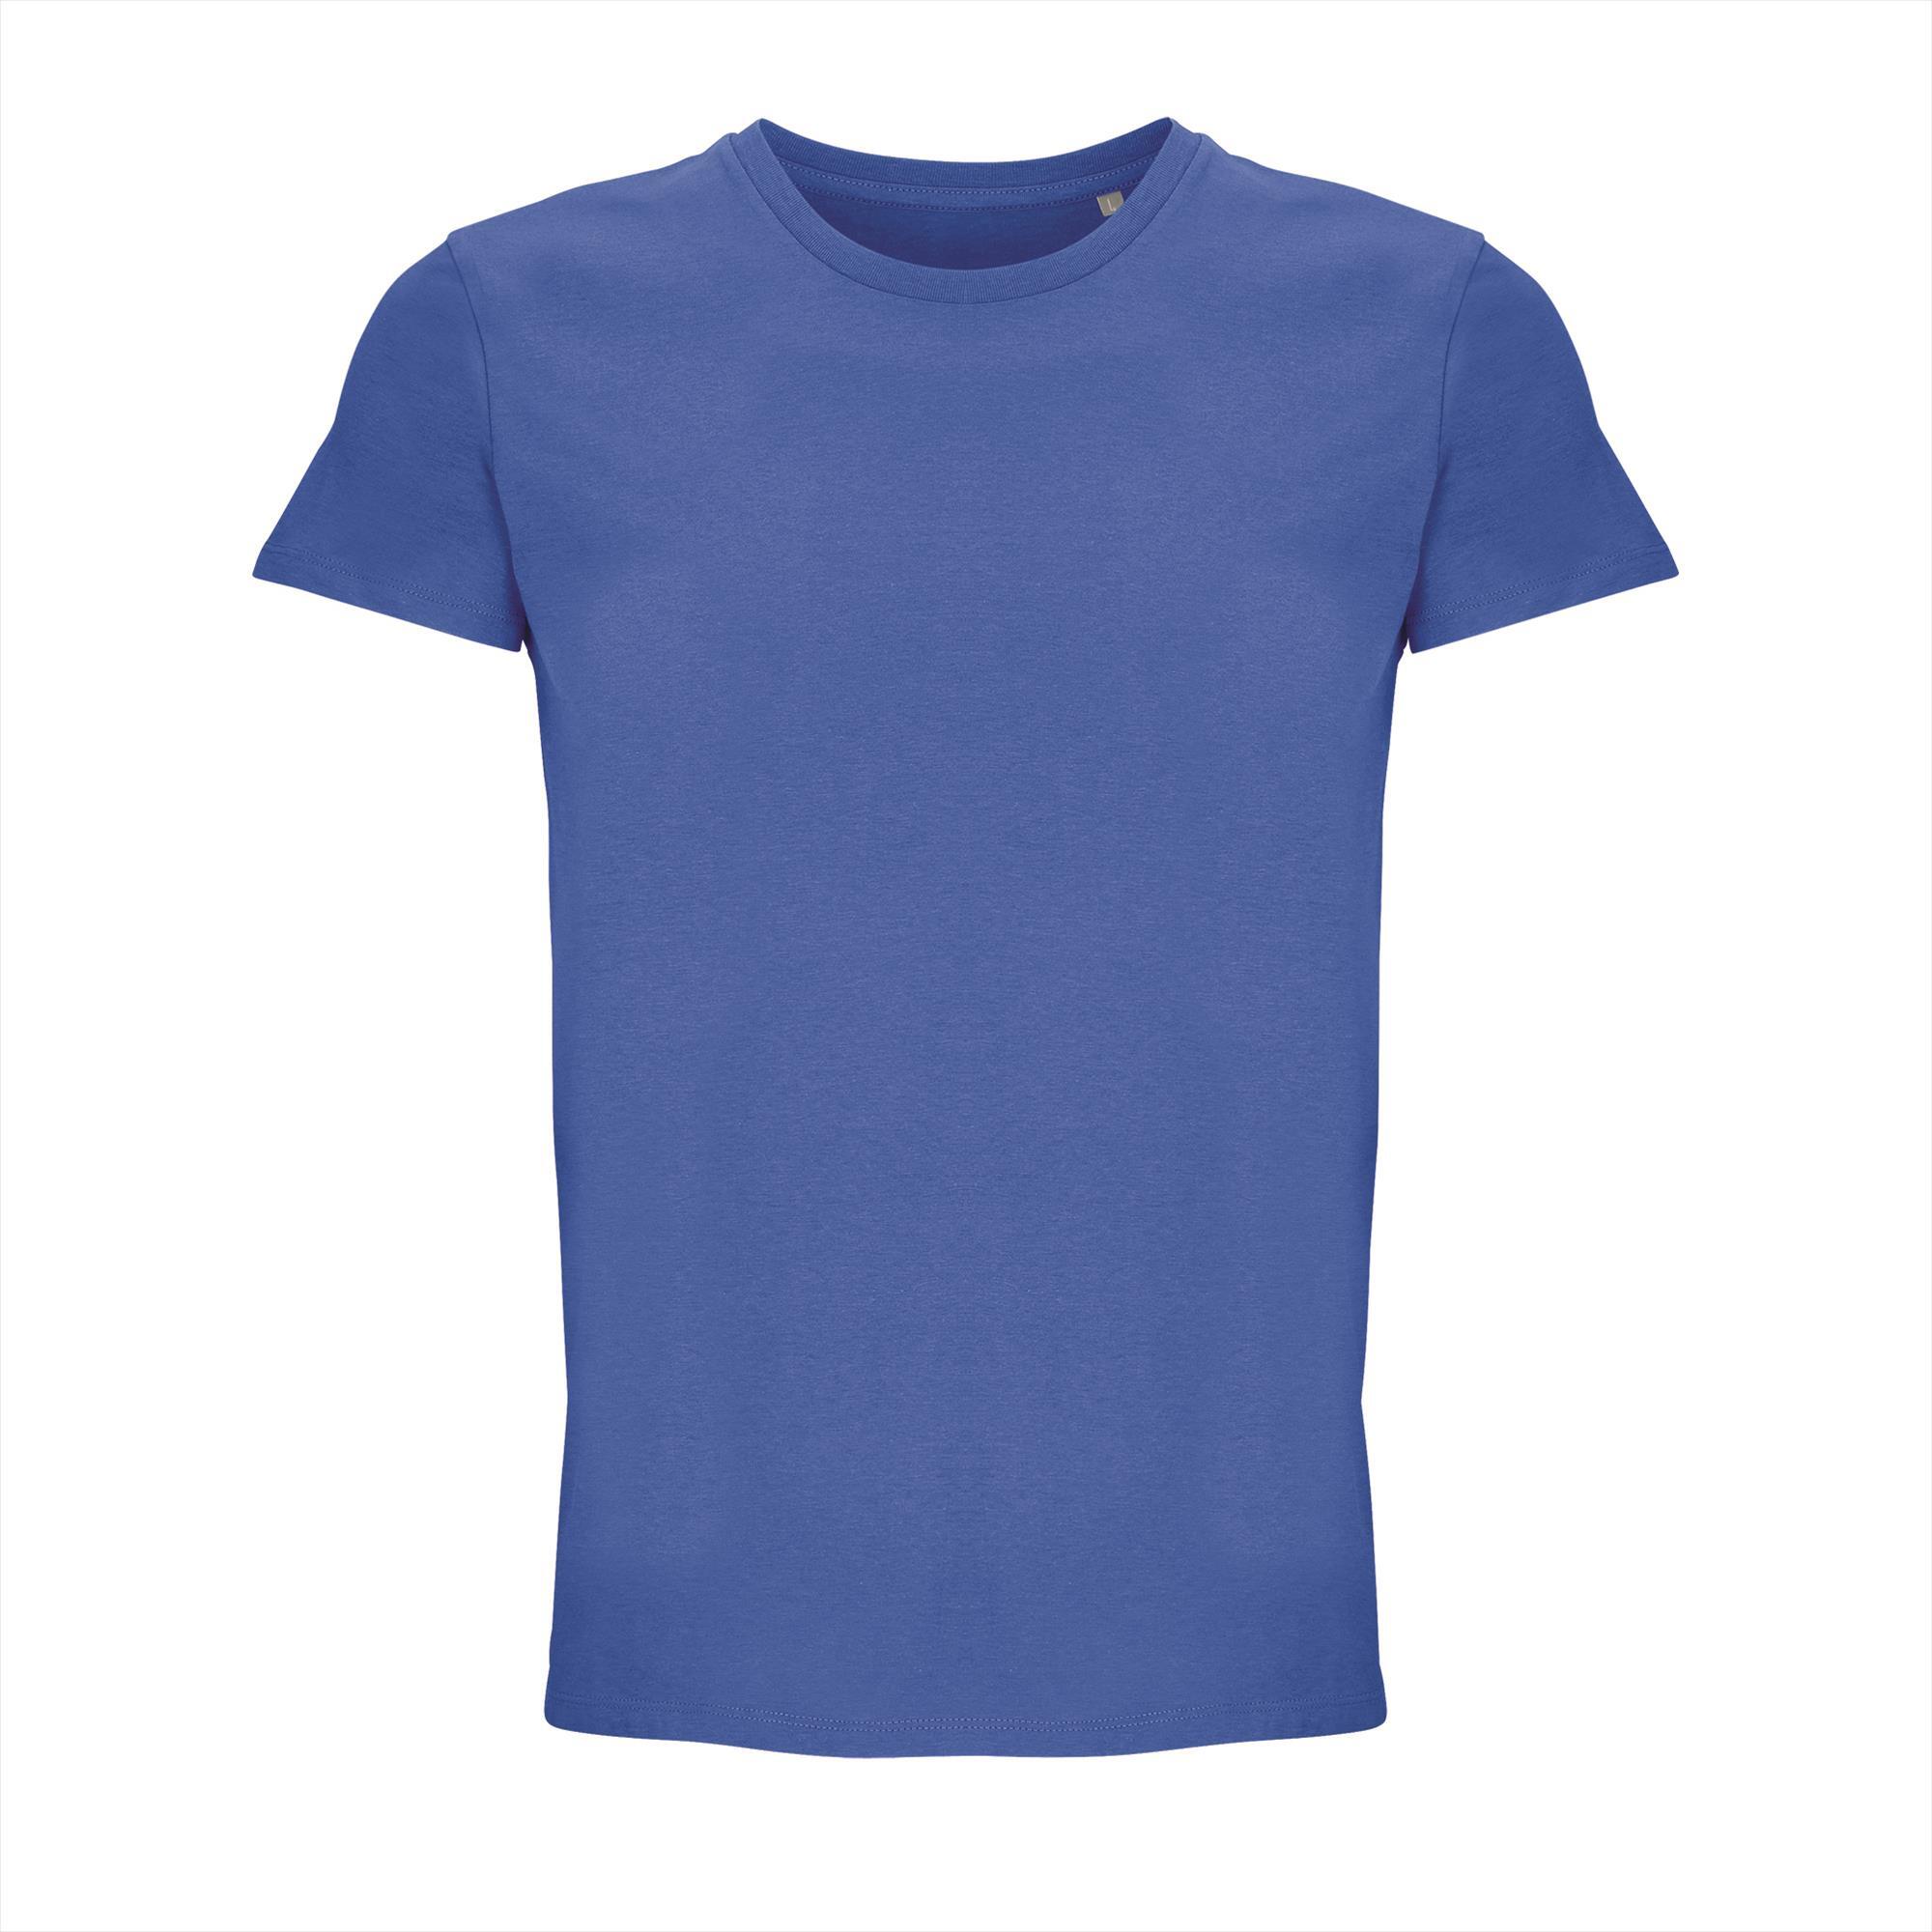 Unisex T-shirt heren royal blauw bedrukbaar